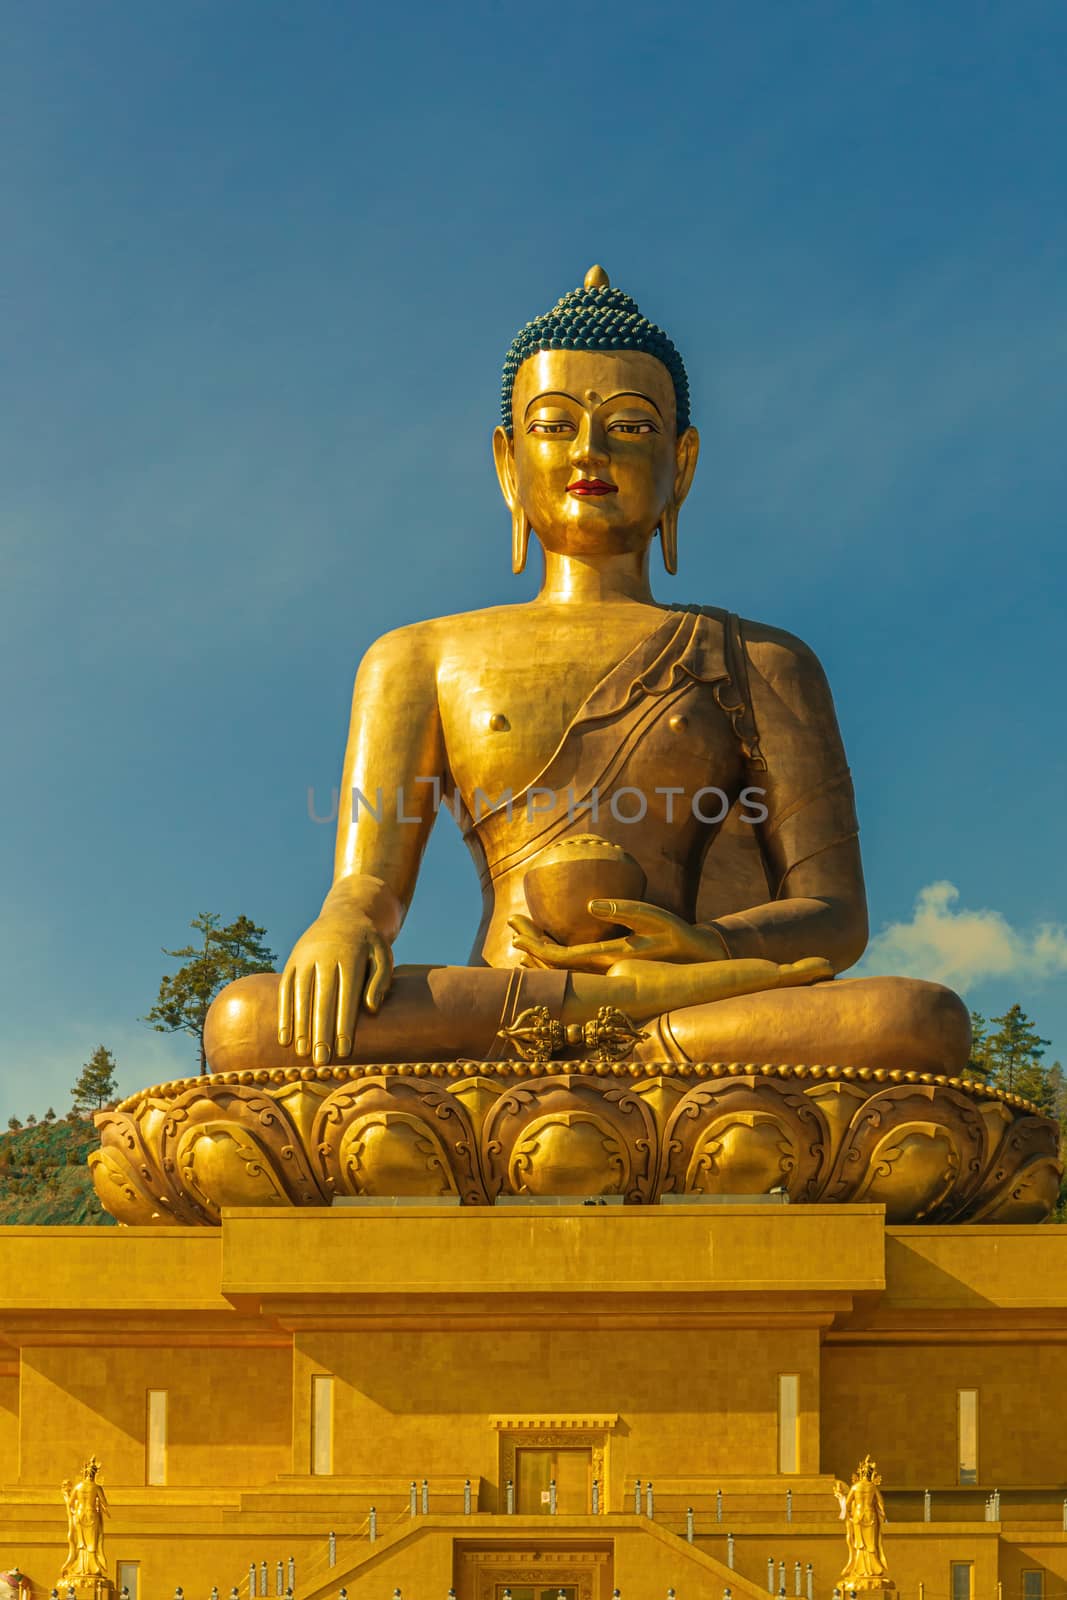 Giant golden Buddha sitting in a shell - Thimphu, Bhutan by COffe